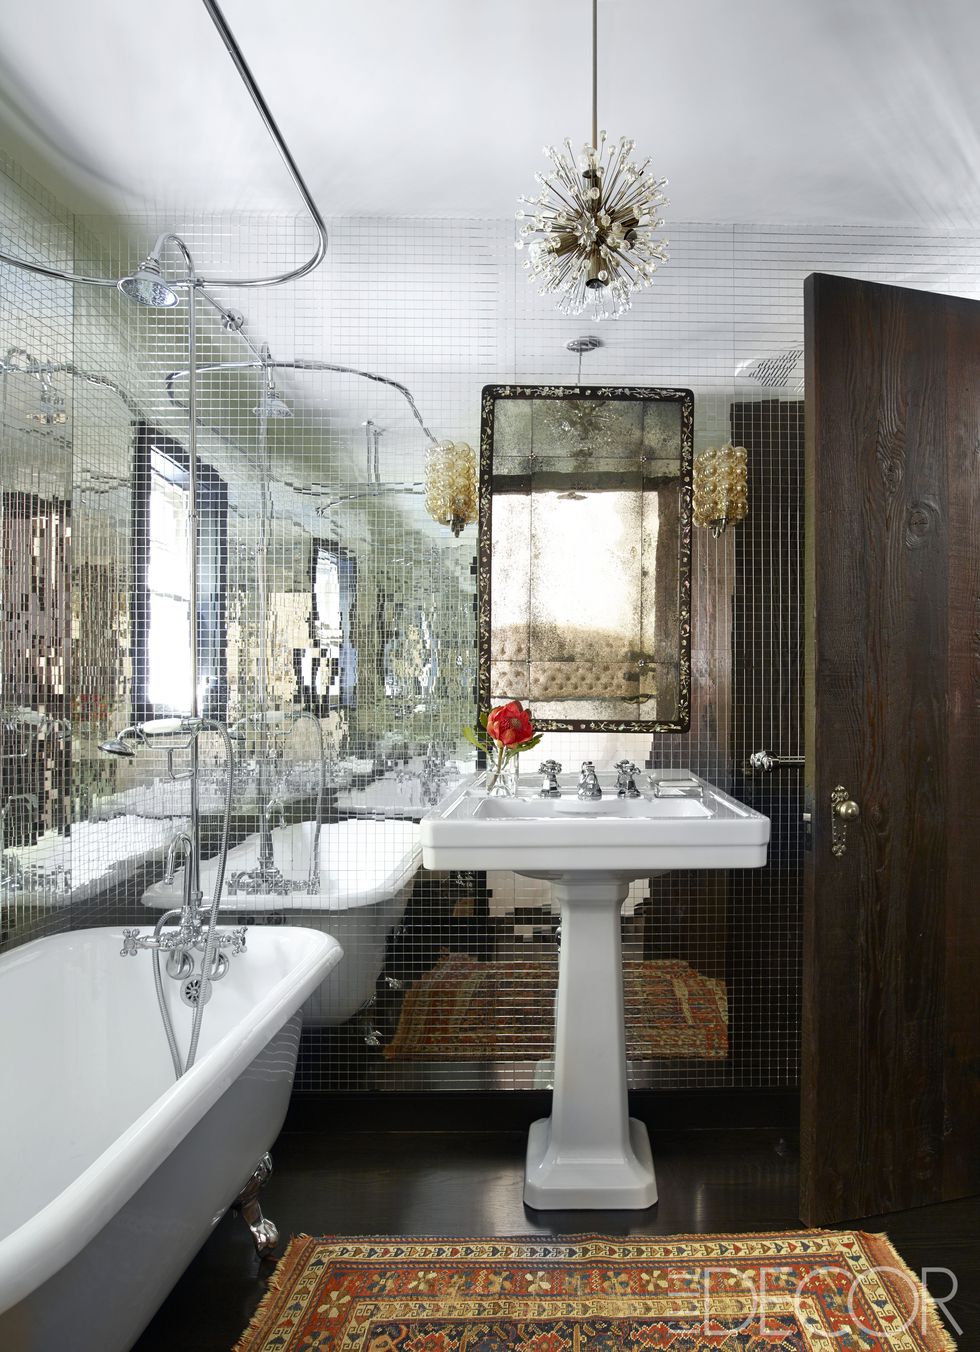 To see more news about Luxury Bathrooms in the world visit us at http://luxurybathrooms.eu/ #luxurybathrooms #interiordesign #homedecor @BathroomsLuxury @bocadolobo @delightfulll @brabbu @essentialhomeeu @circudesign @mvalentinabath @luxxu @covethouse_